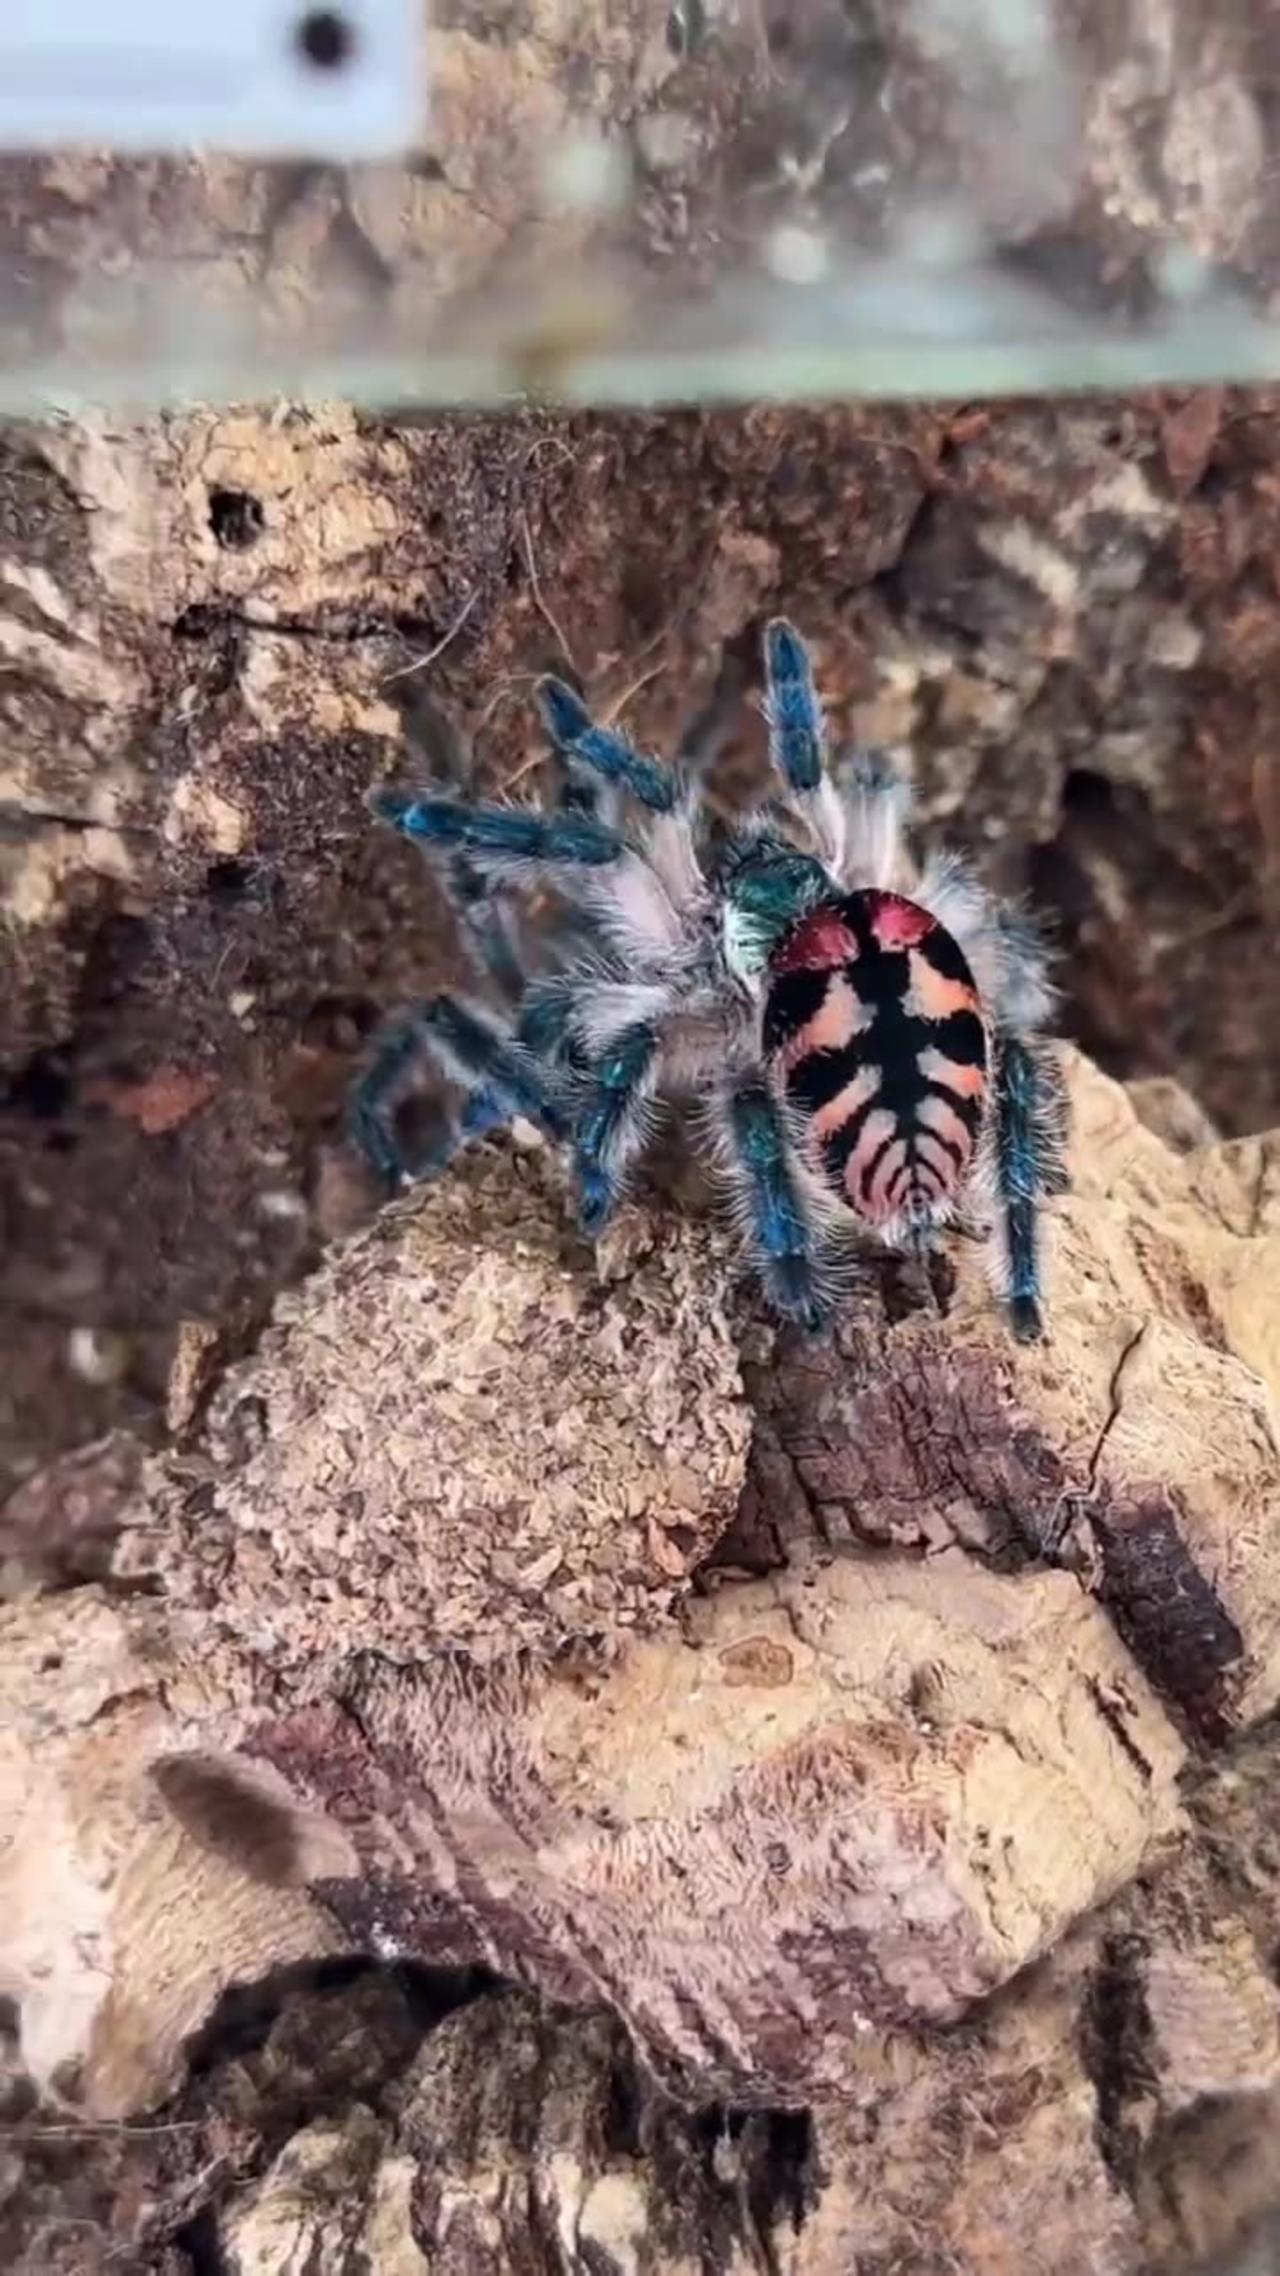 Brazilian jewel tarantula - what a beauty 🥰